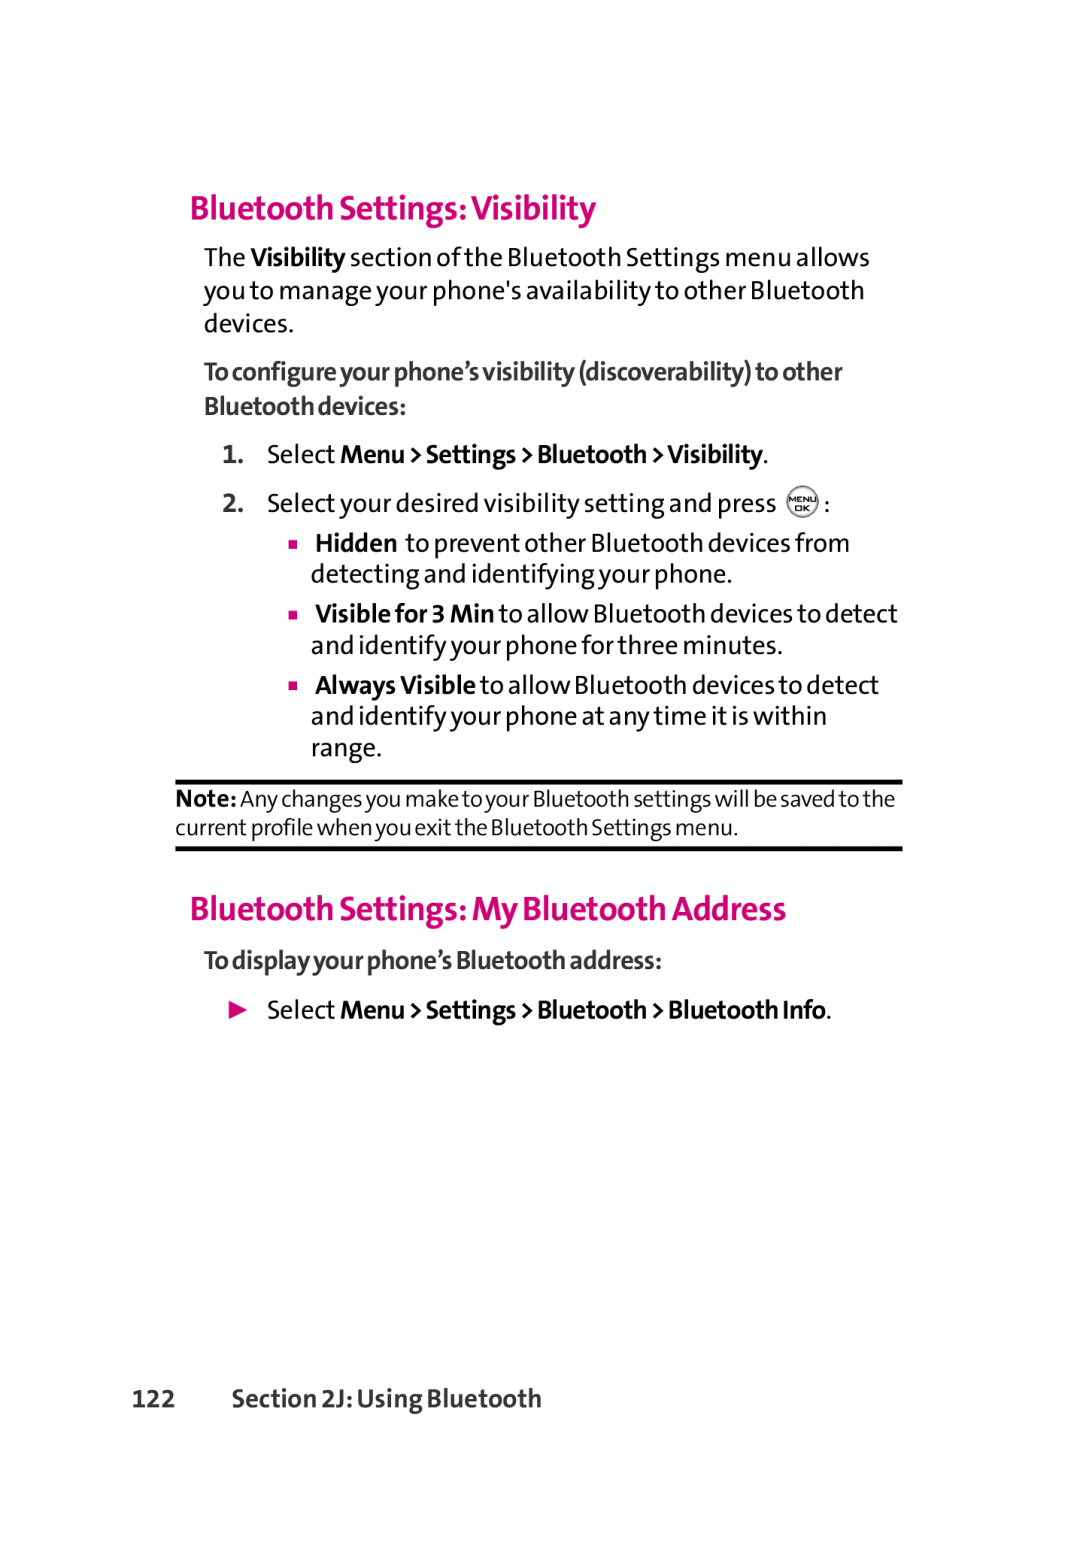 LG Electronics 350 manual Bluetooth SettingsVisibility, Bluetooth Settings My Bluetooth Address, J Using Bluetooth 